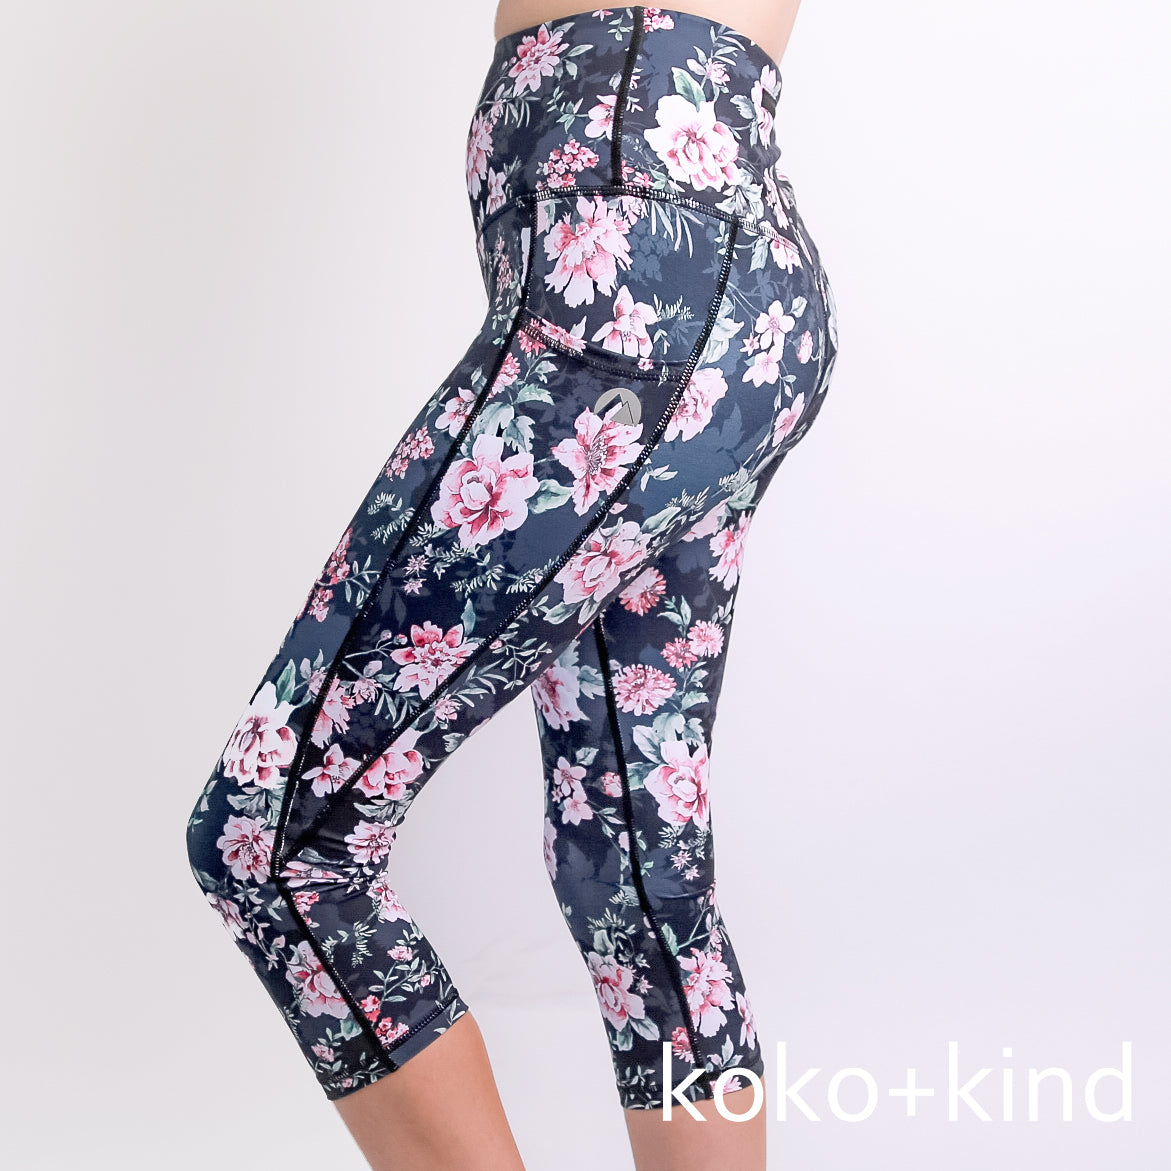 koko and kind Floral Capri Leggings Pink, pretty graphic, running, dance, gym, crossfit.